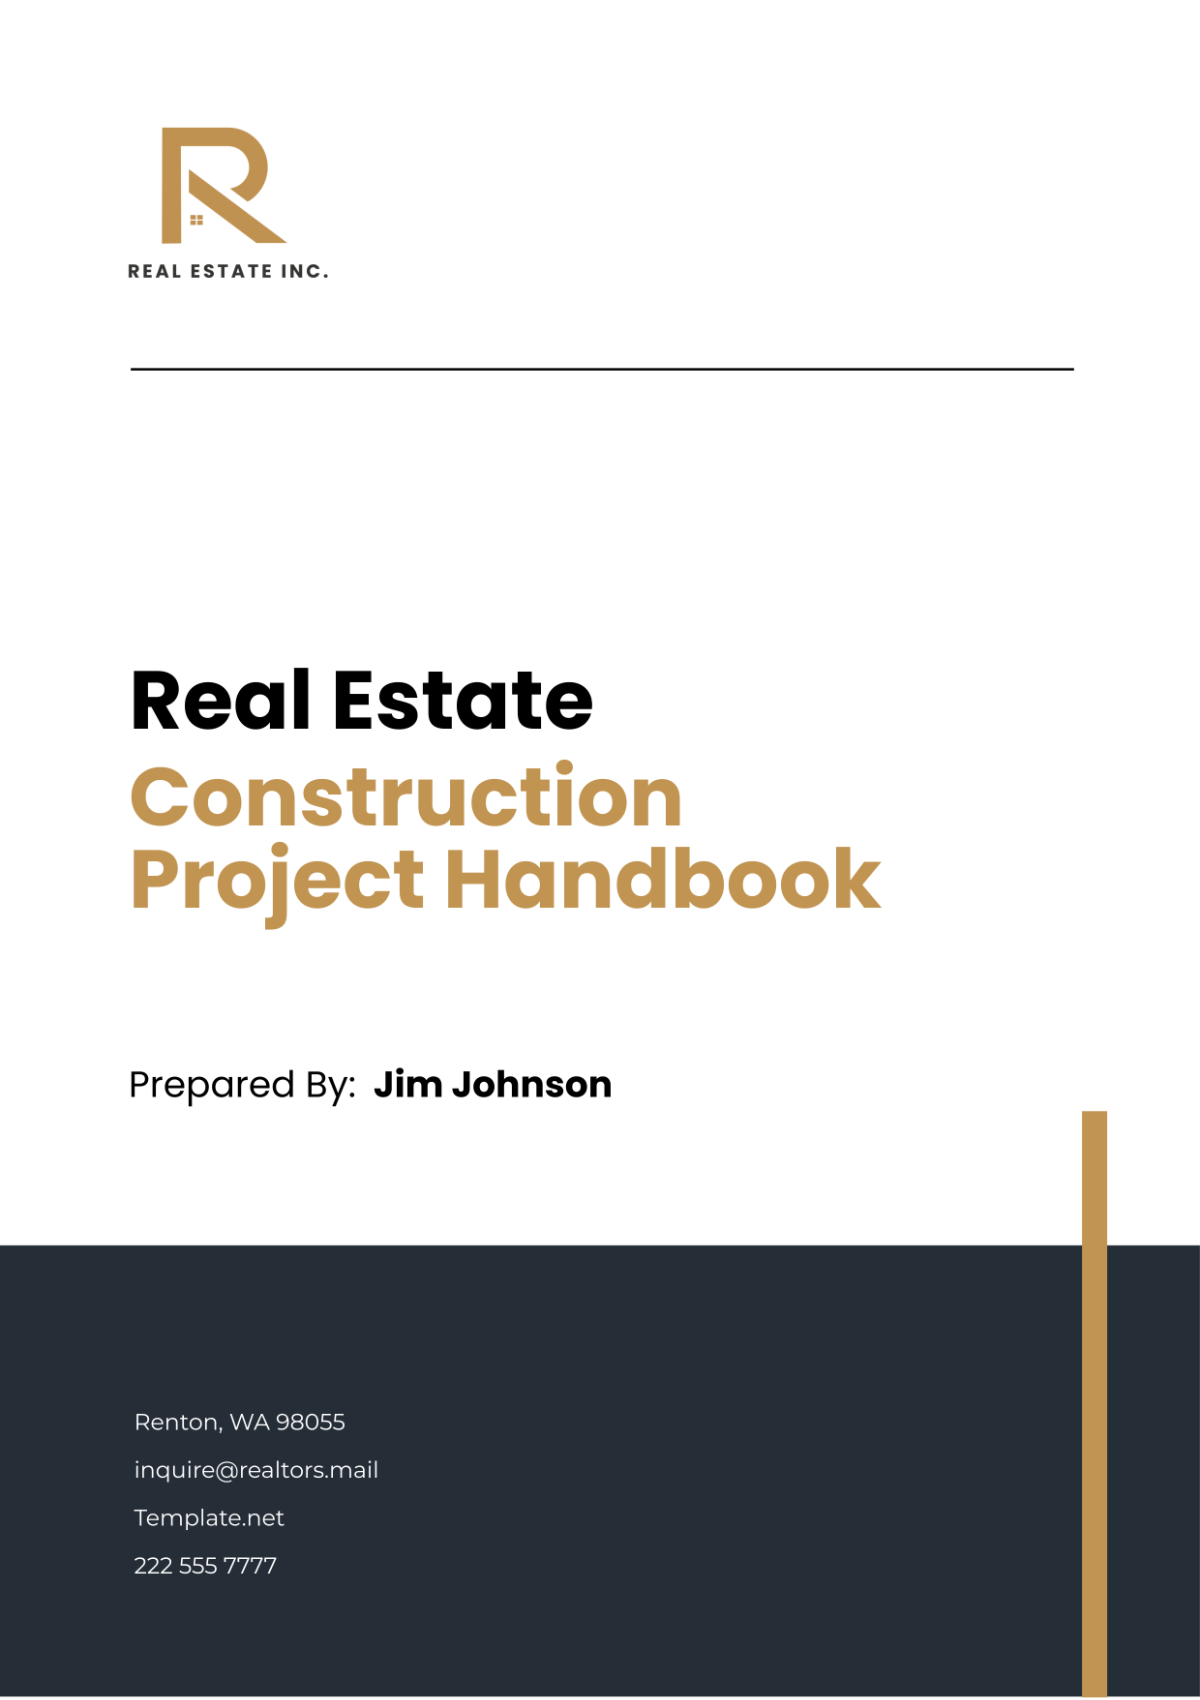 Real Estate Construction Project Handbook Template